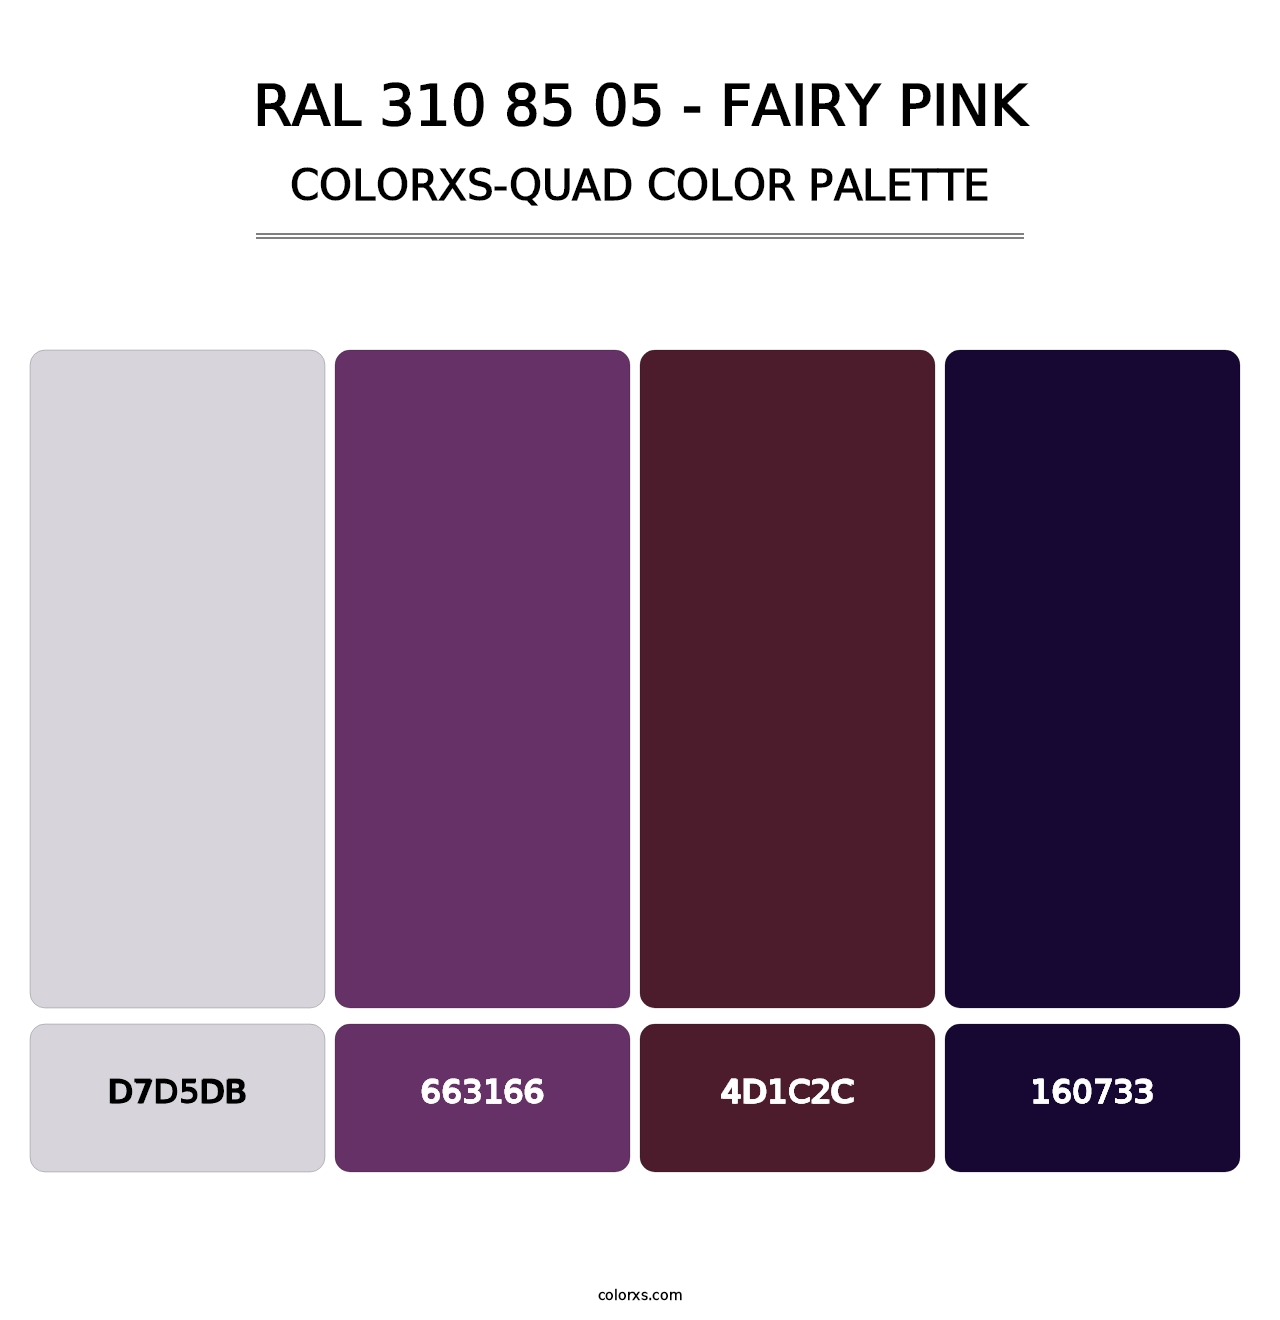 RAL 310 85 05 - Fairy Pink - Colorxs Quad Palette